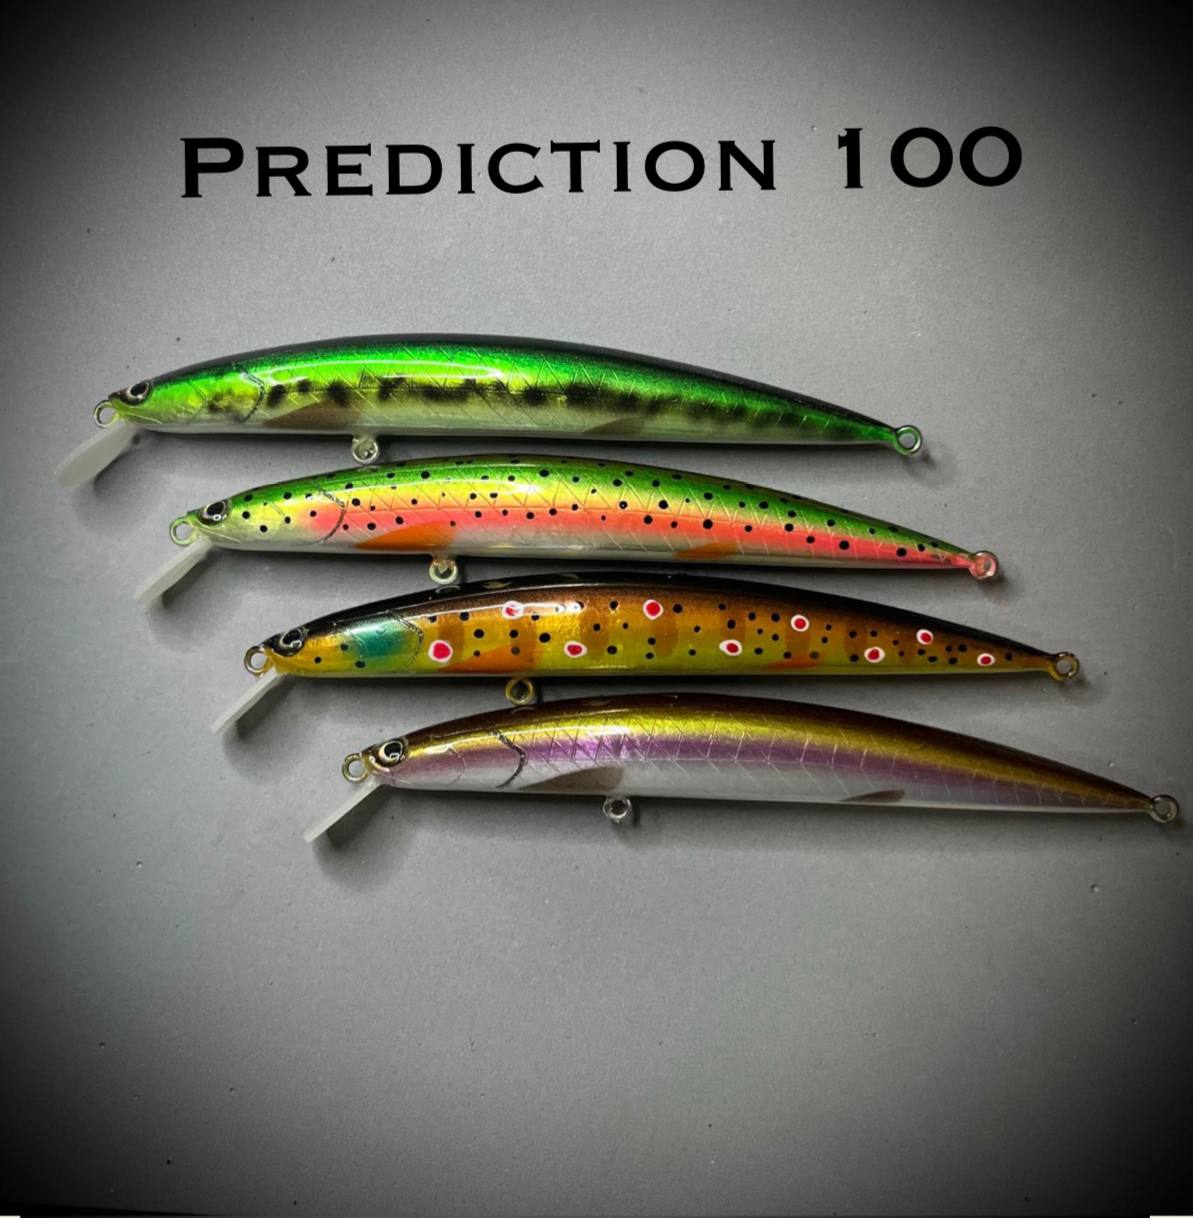 Prediction 100